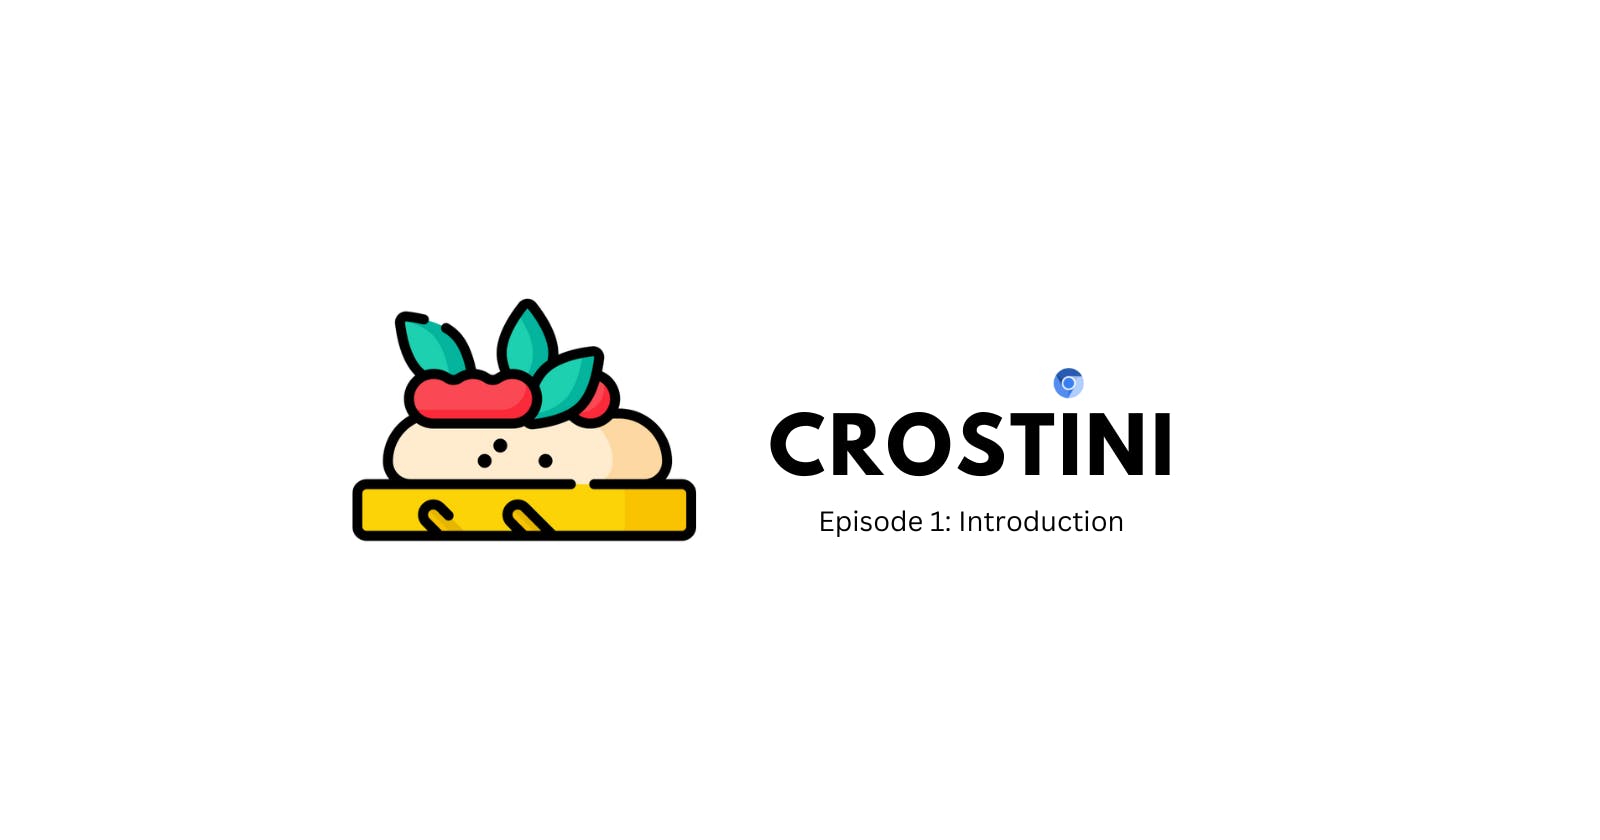 Crostini I: Brief introduction